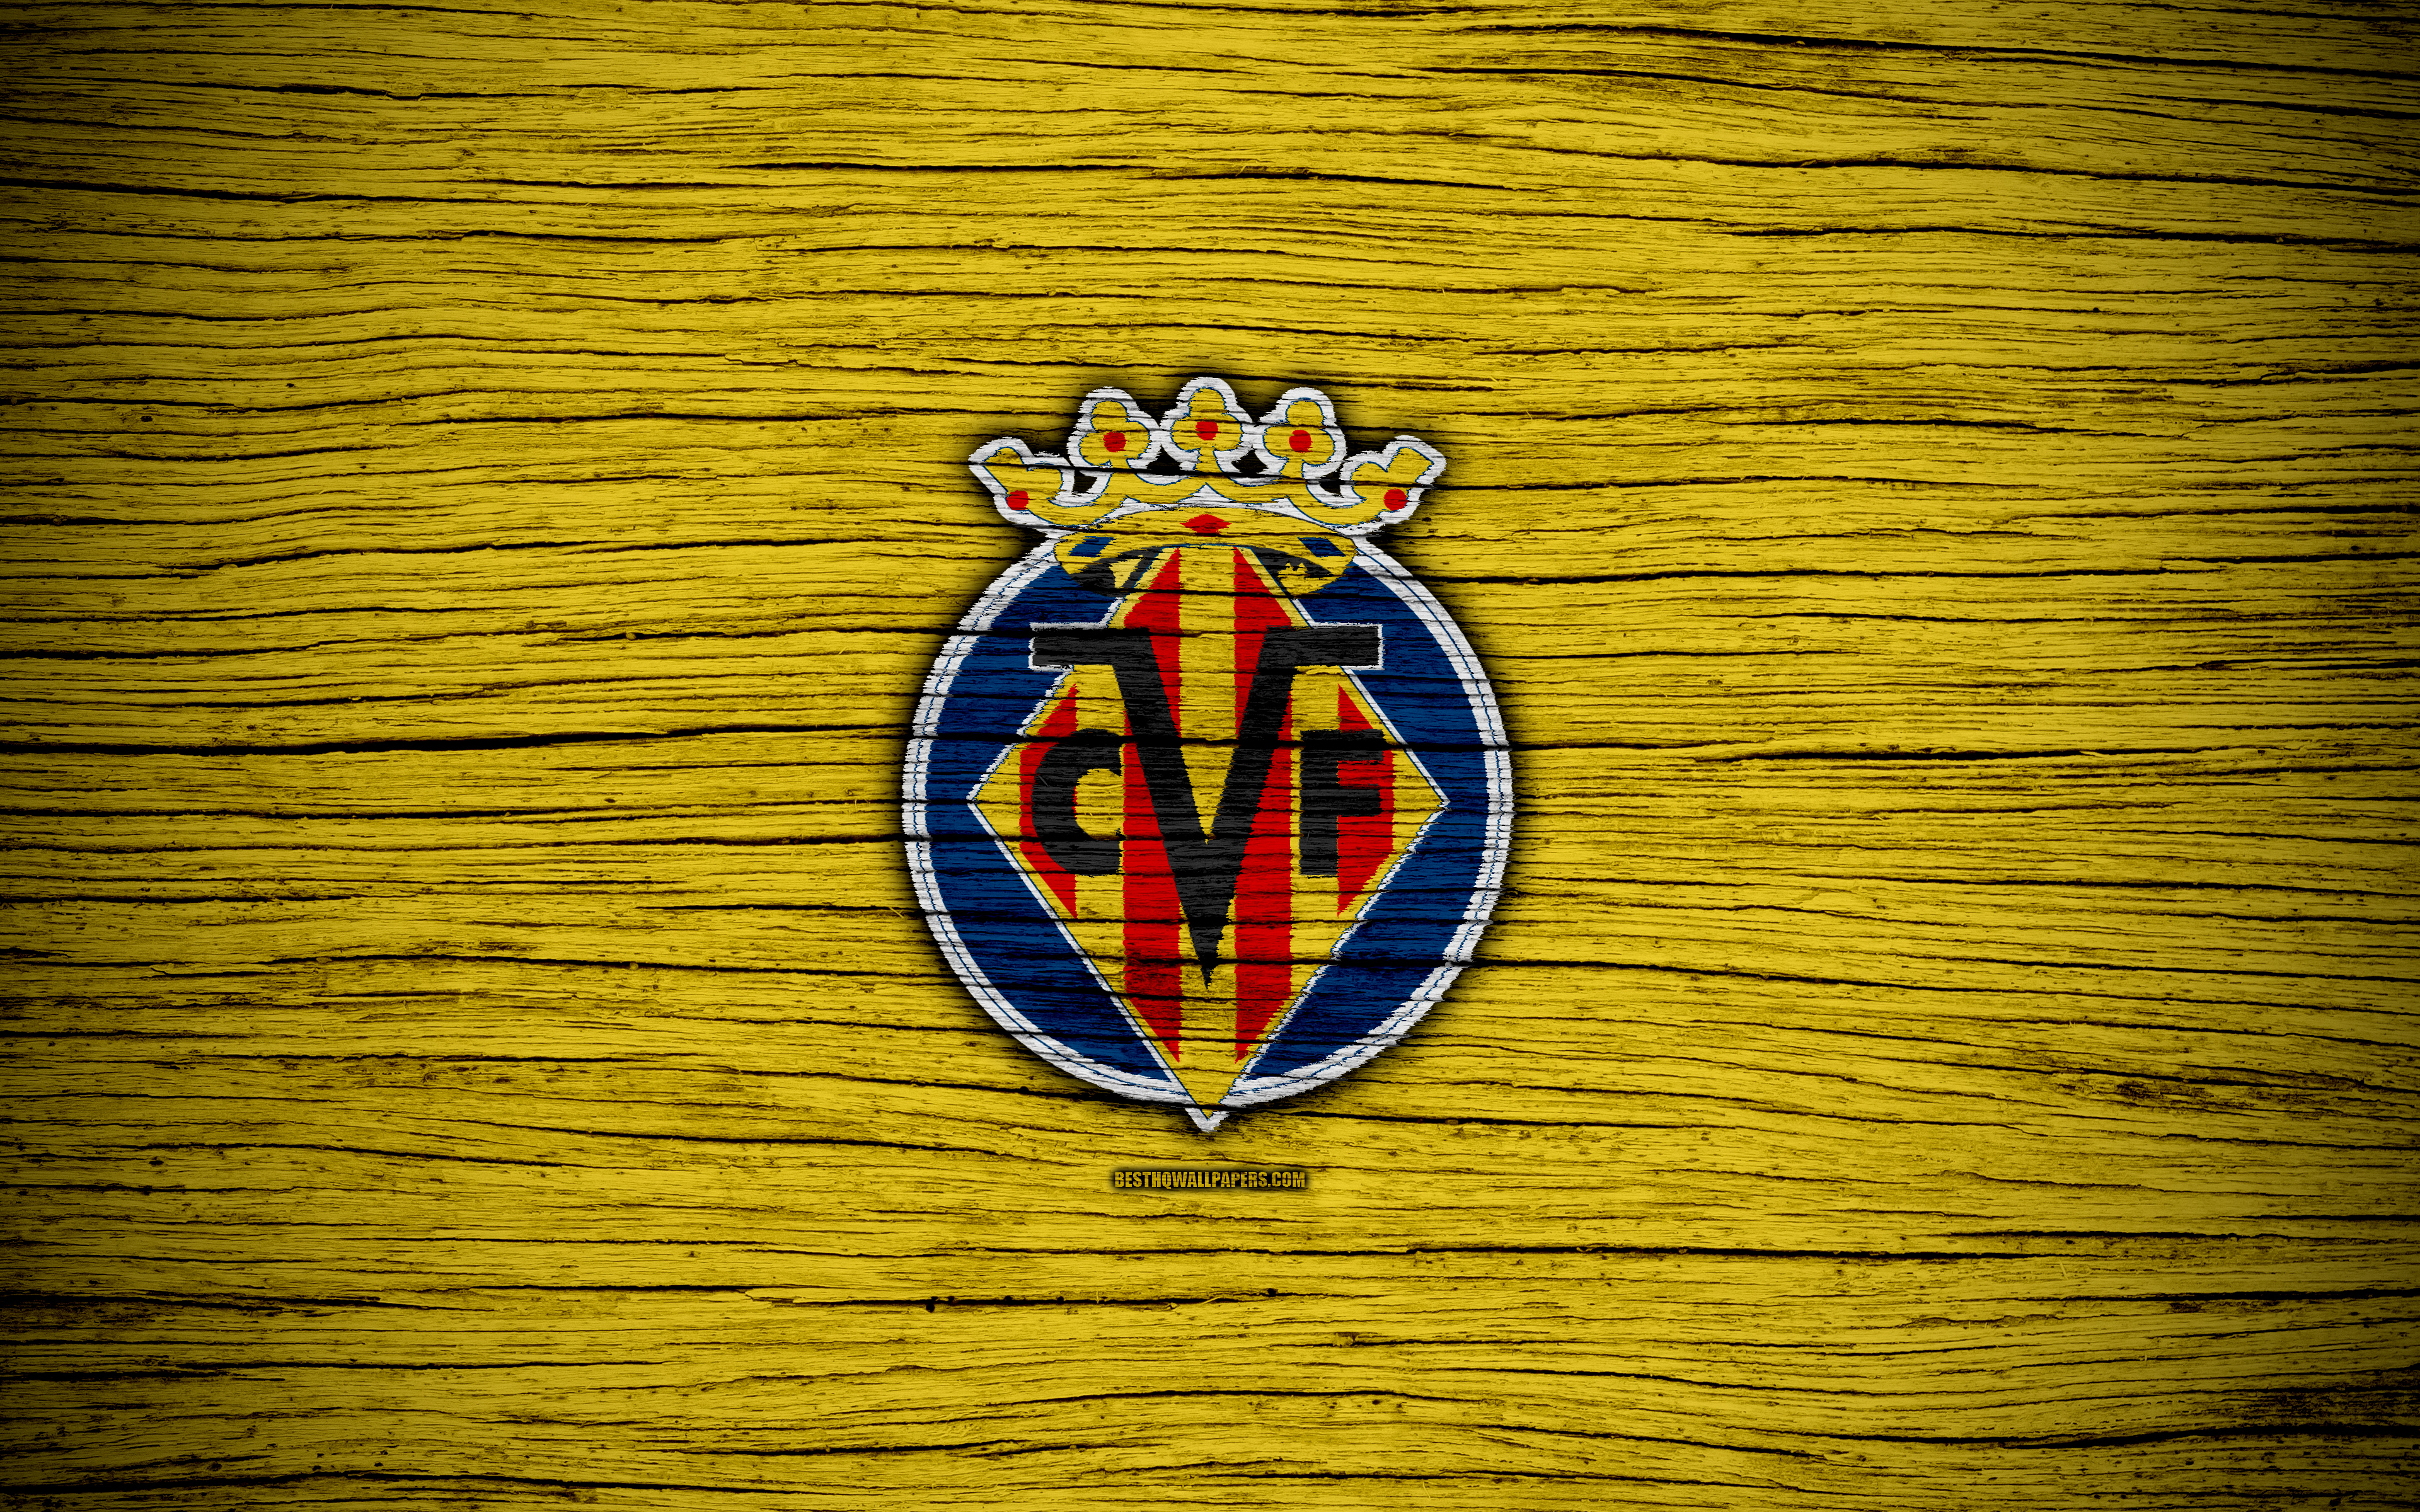 Villarreal Logo / Villarreal Vs Man United Live Stream How To Watch The